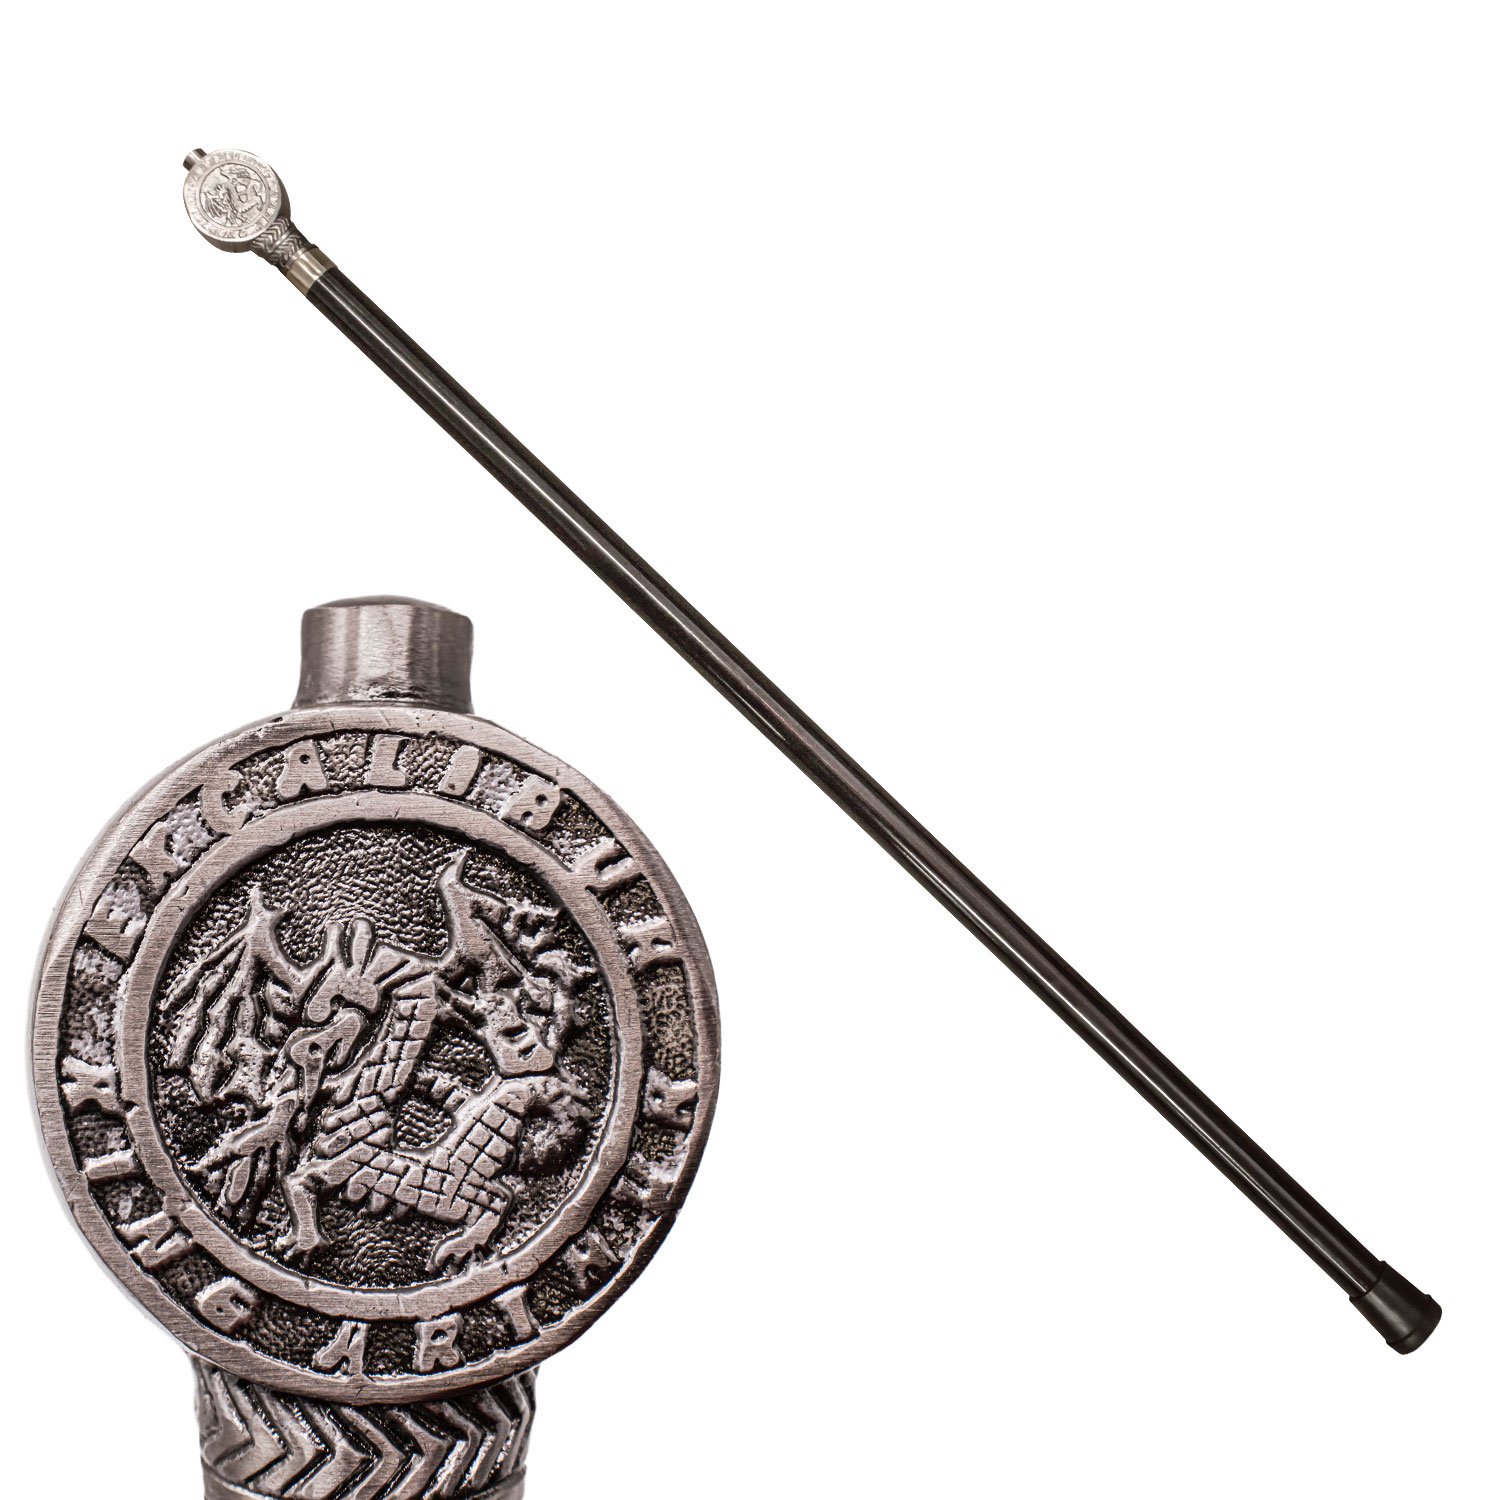 King Arthur Excalibur Antique Walking Cane Stick (No Sword)